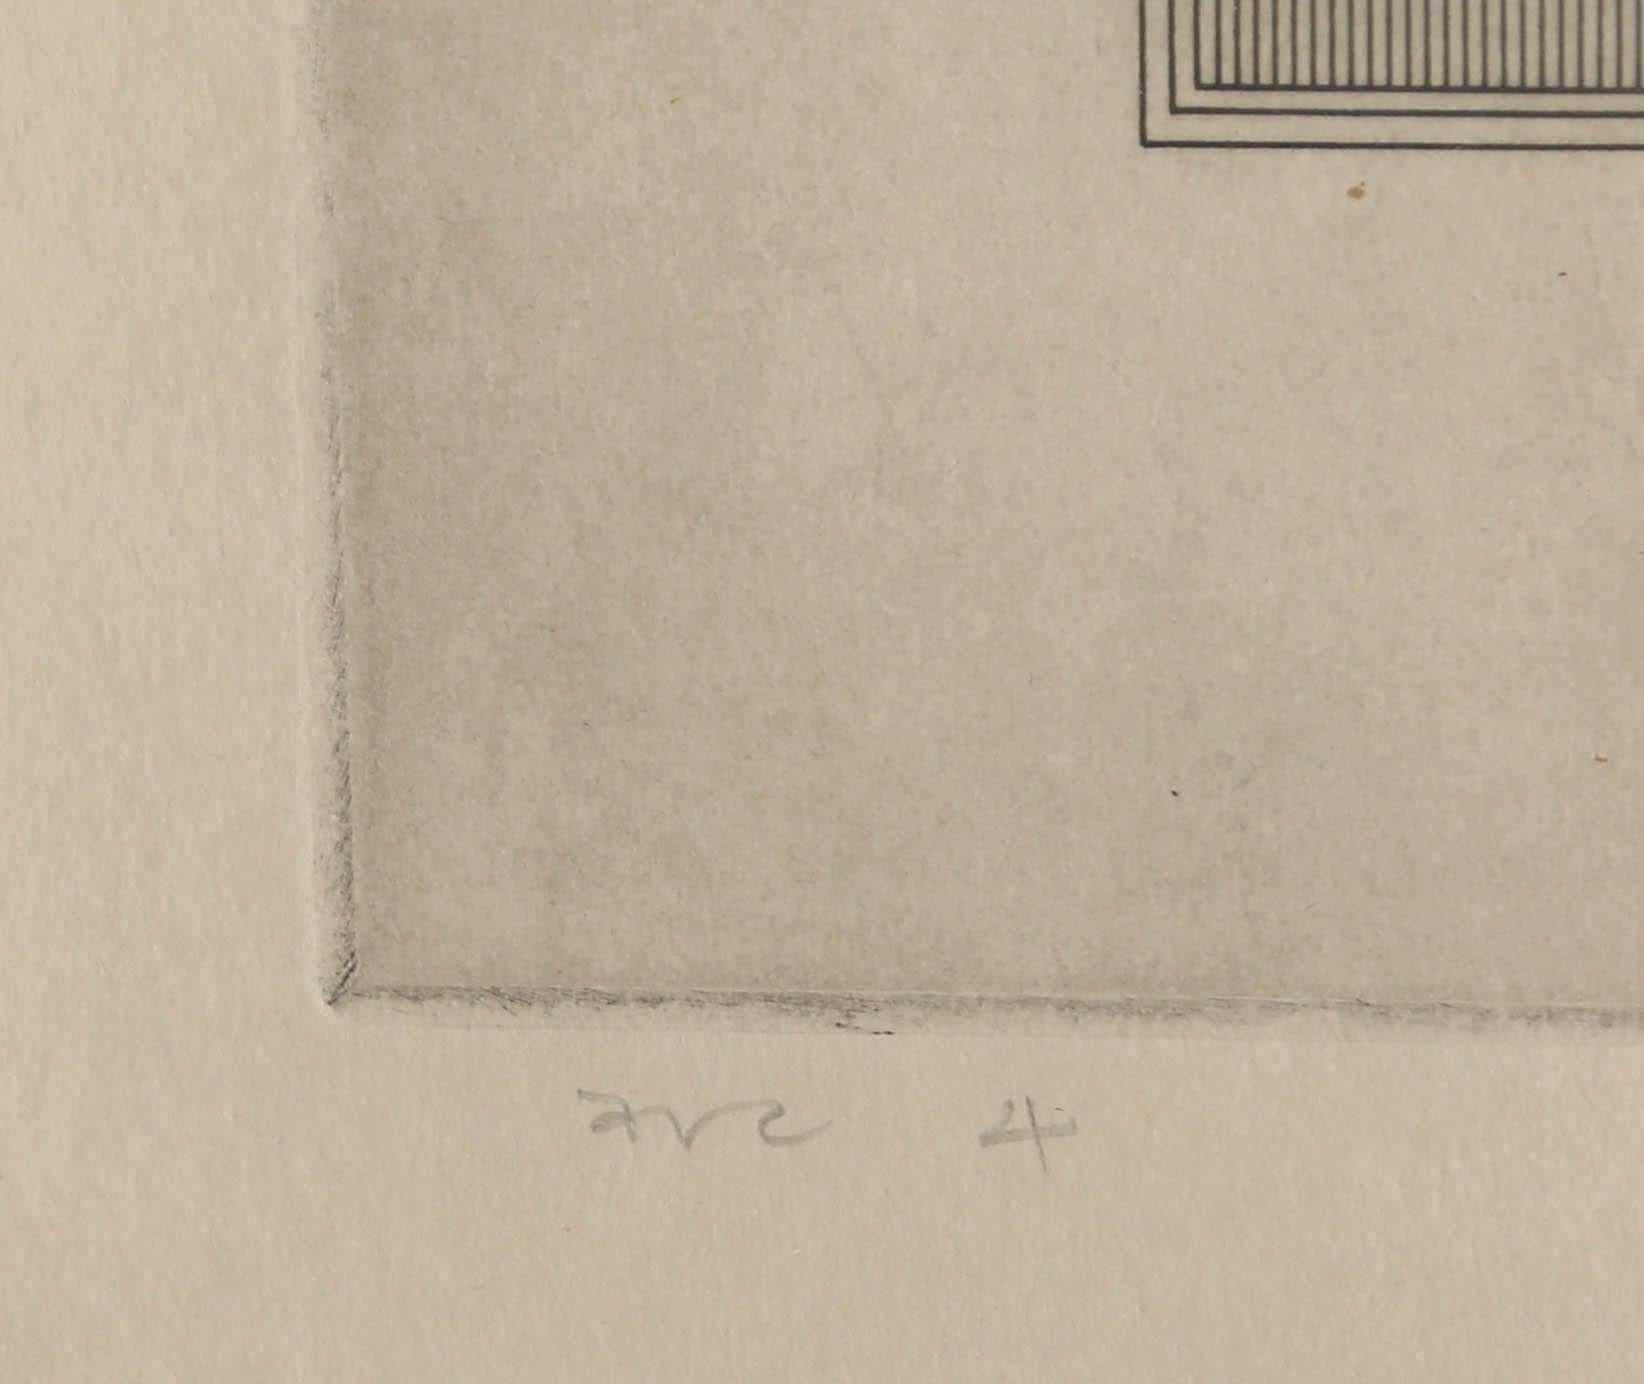 Arc 4, Minimalist Etching by Gordon House 1971 3